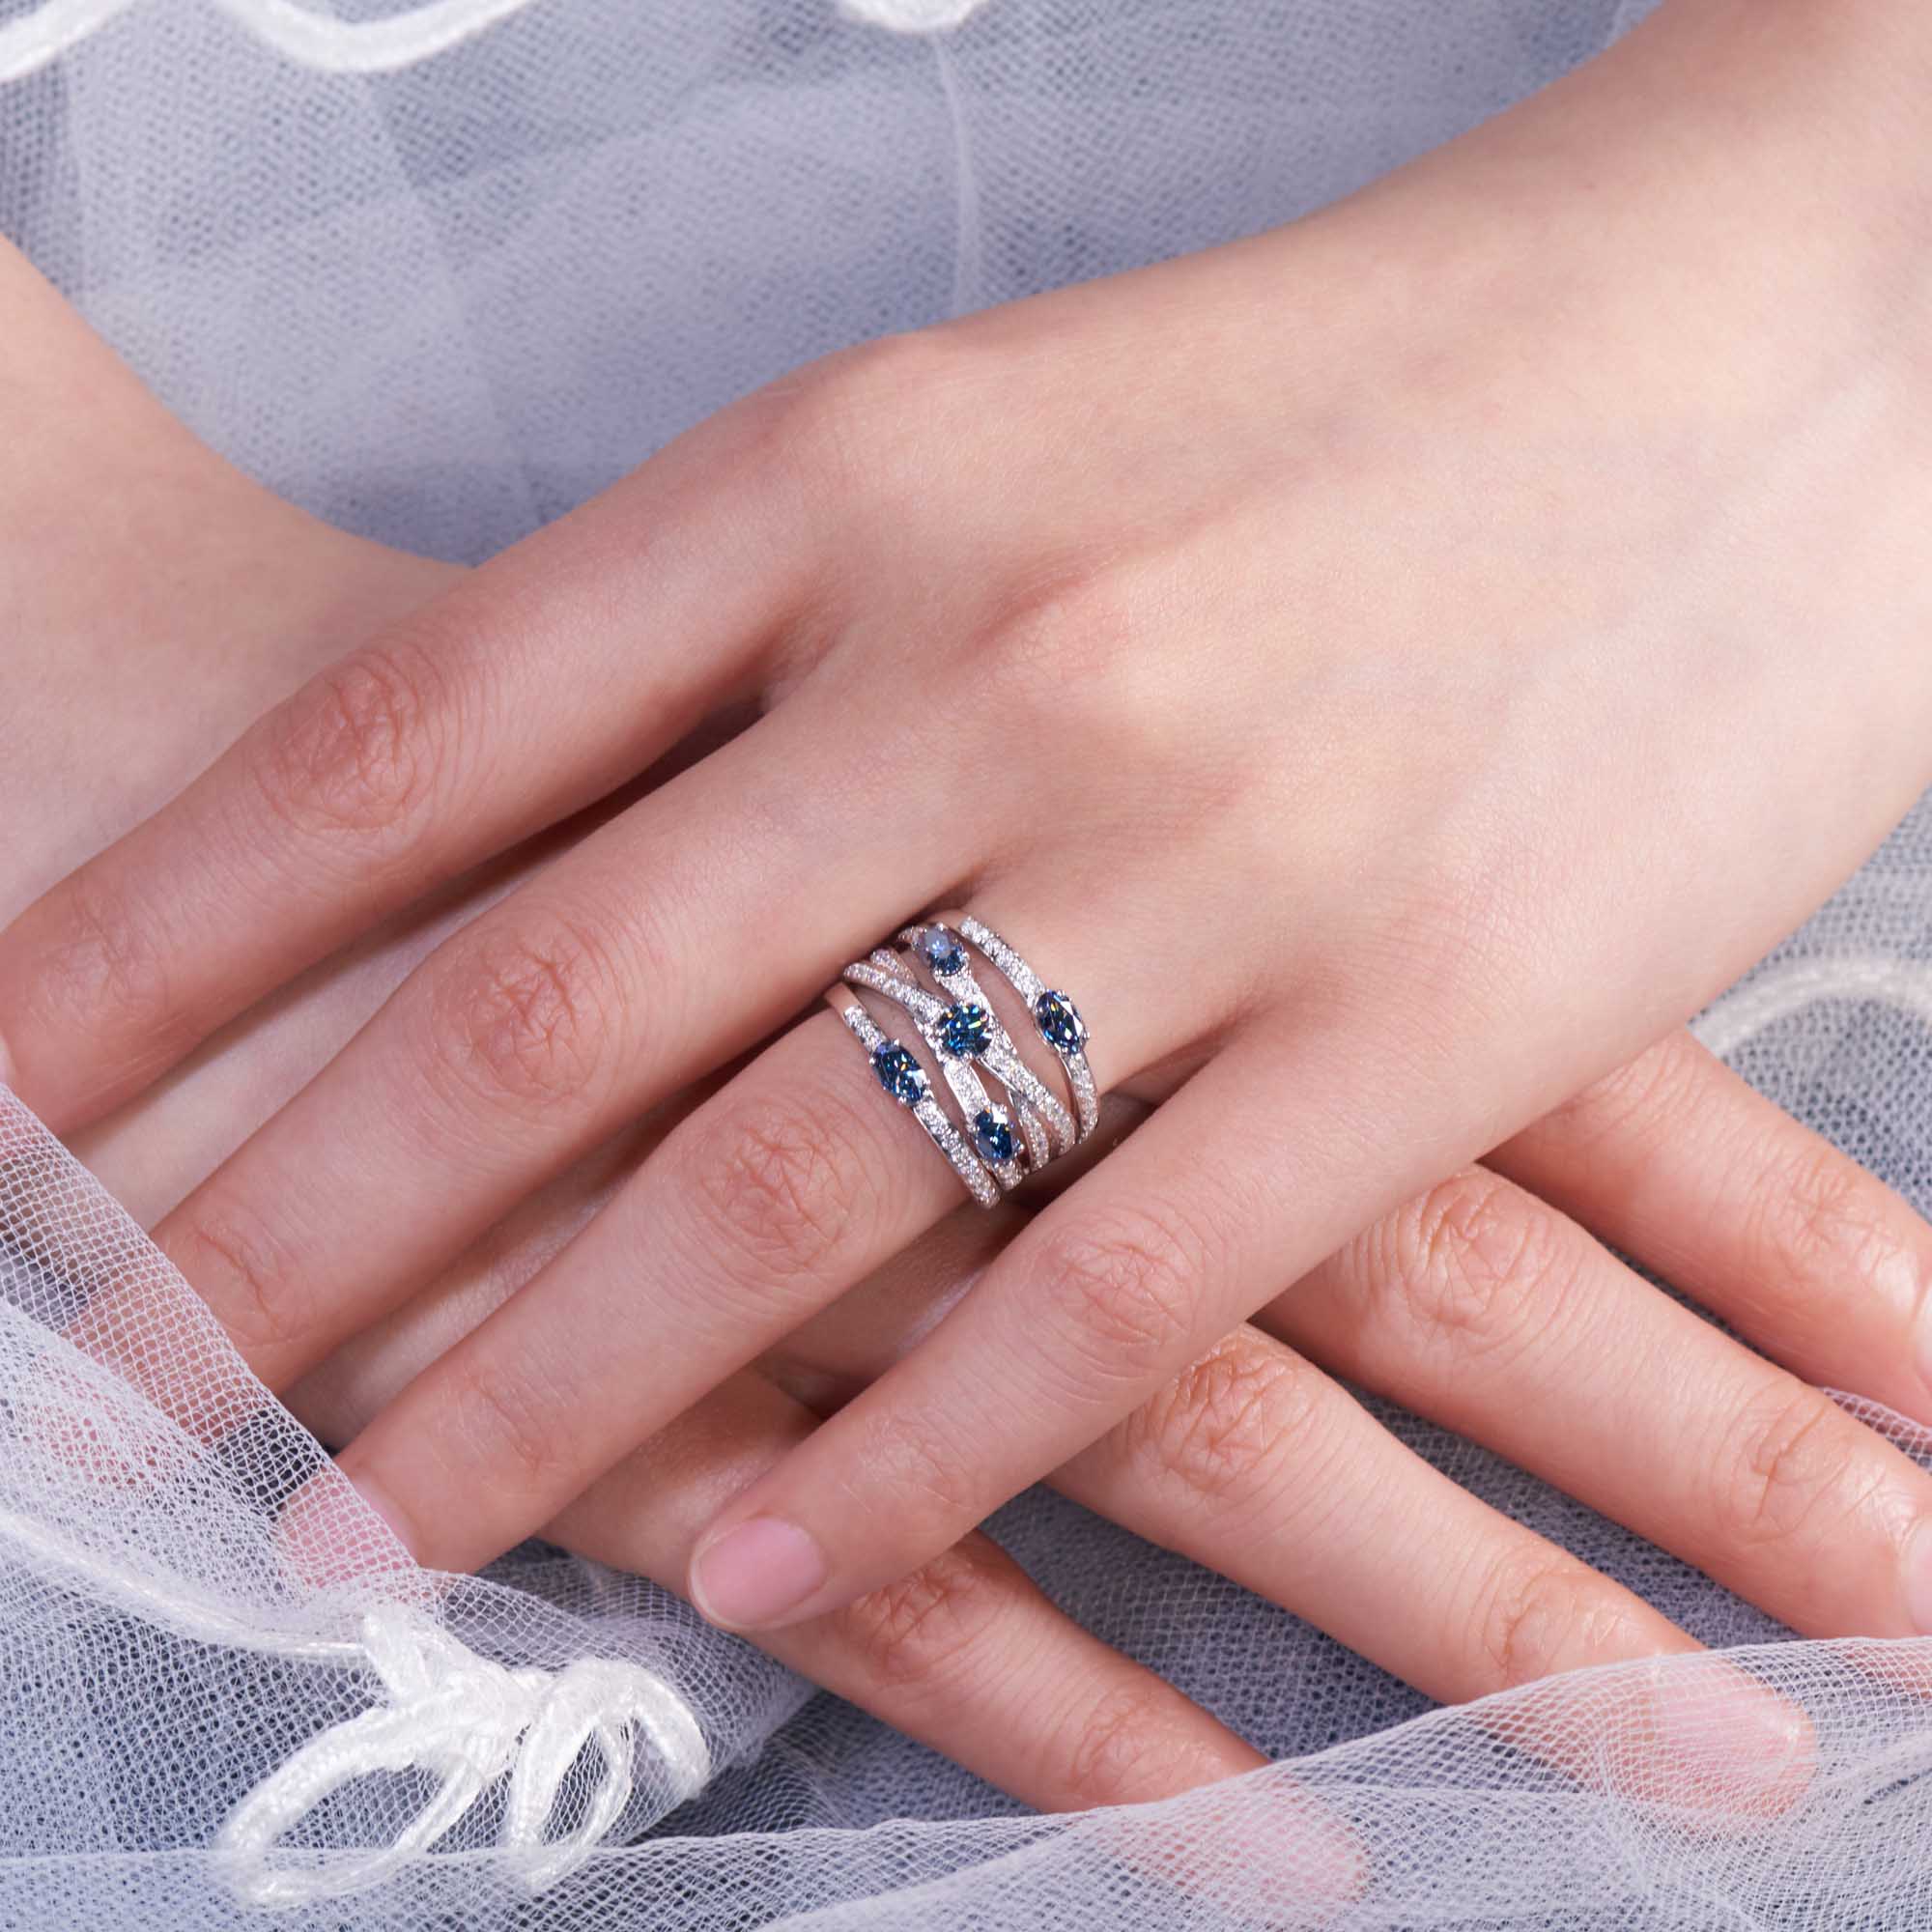 GIGAJEWE Oval Cut Natural Blue Color 9K/14K/18K white gold Three Settings Moissanite Ring, Engagement Ring Wedding Ring Bridesmaid gift